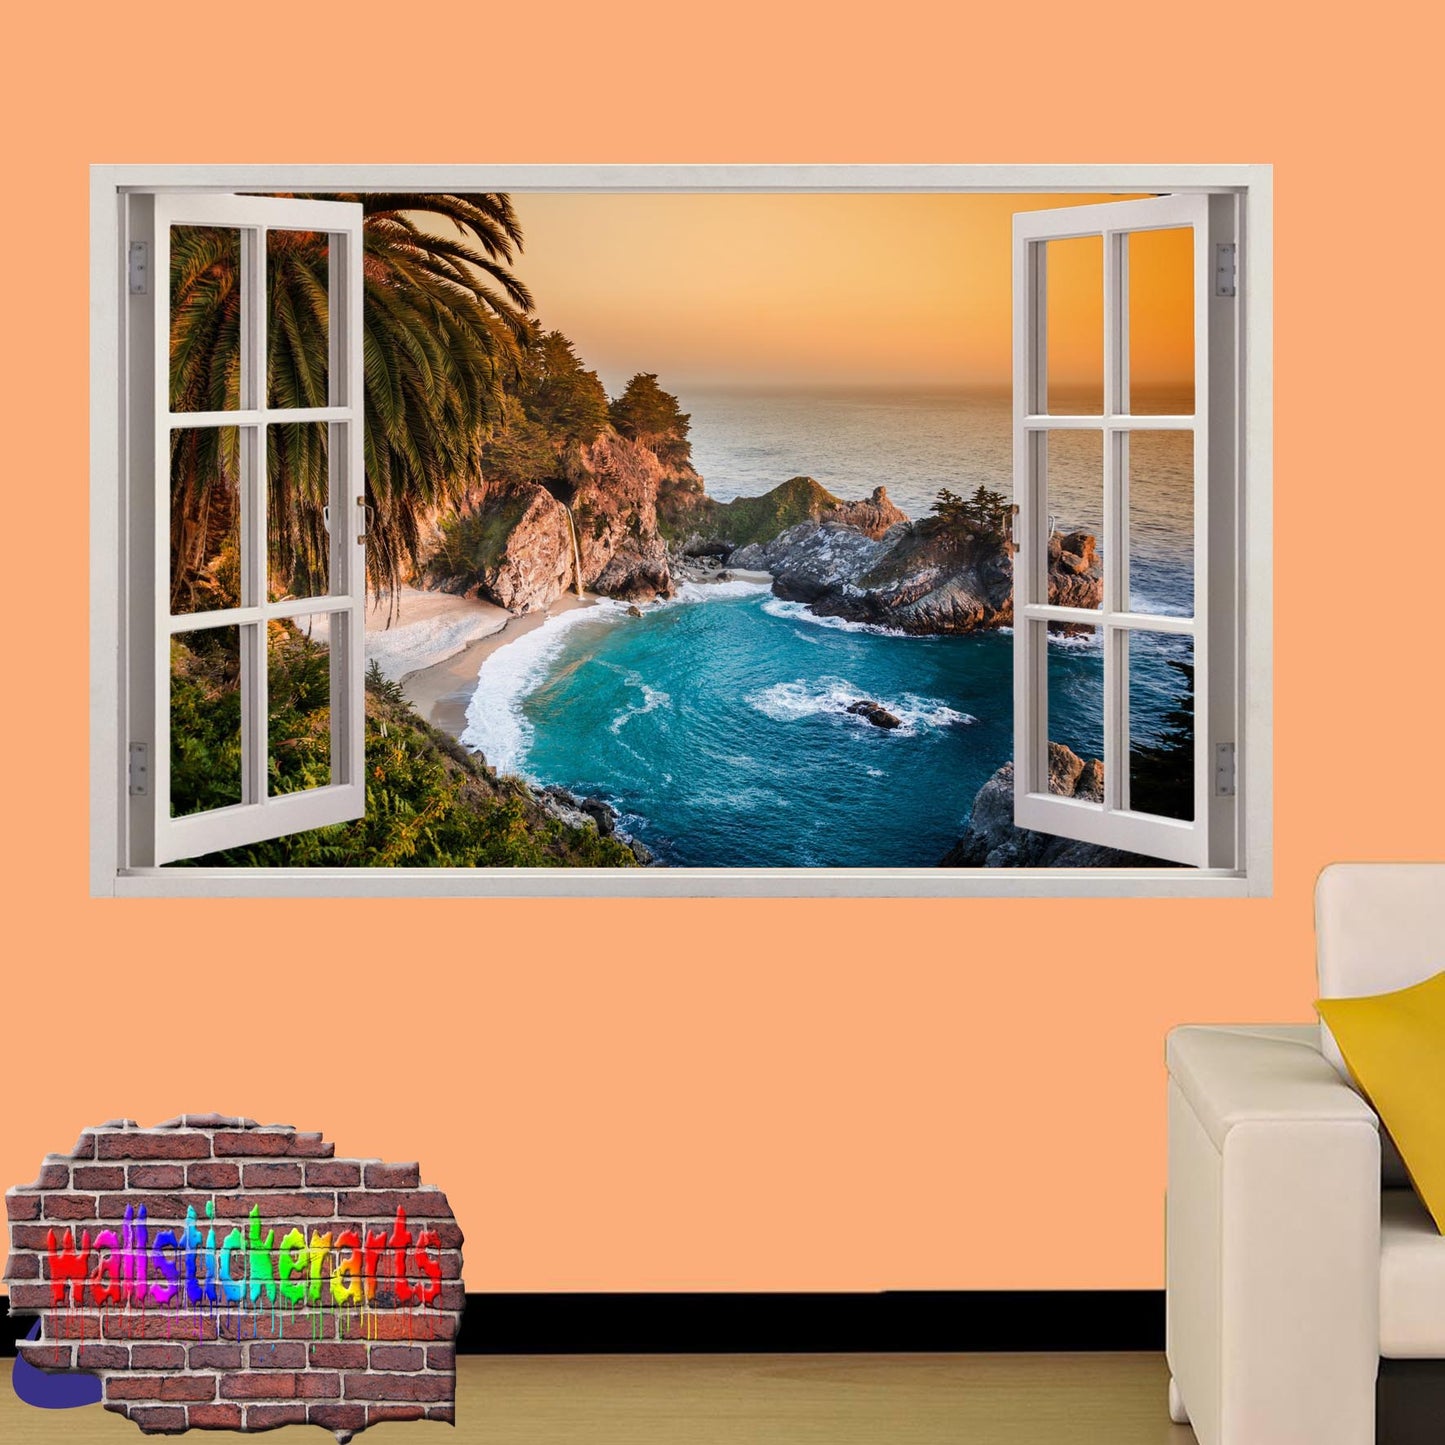 Paradise Bay Beach Sea 3d Art Wall Sticker Mural Room Office Shop Home Decor Decal YU1